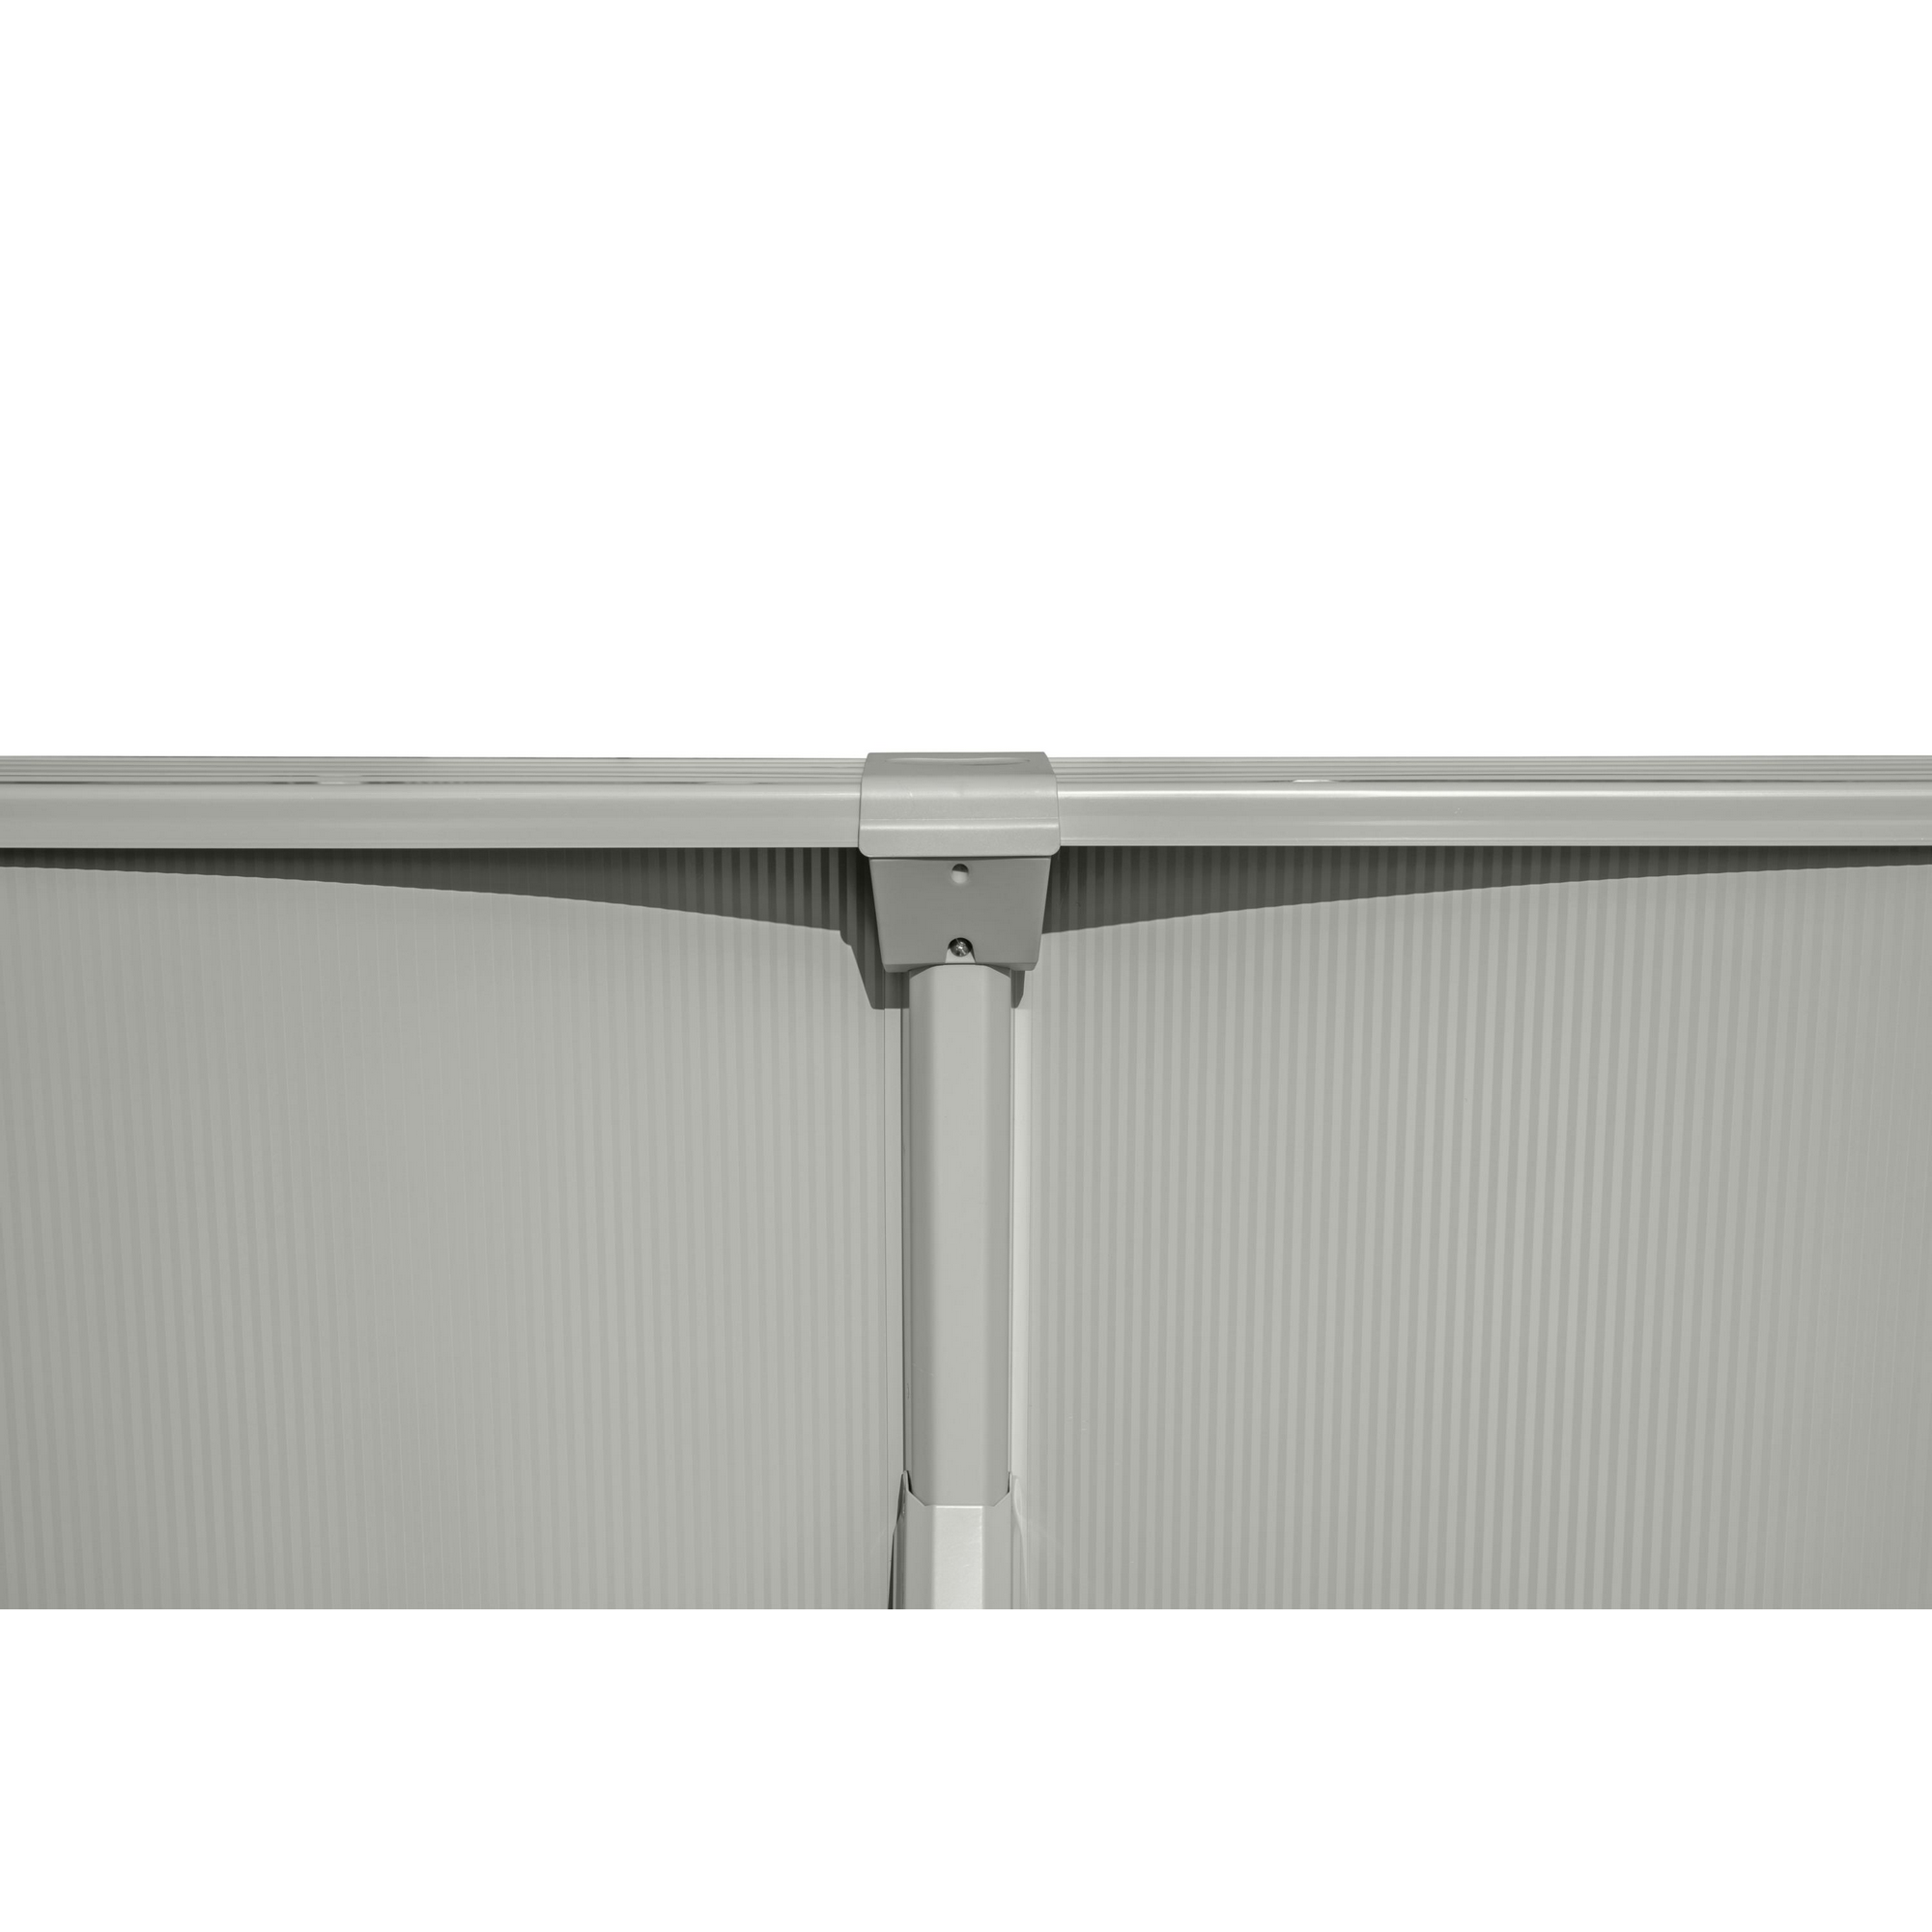 Stahlwandpool 'Hydrium™' Komplett-Set mit Sandfilteranlage granitgrau oval 610 x 360 x 120 cm + product picture